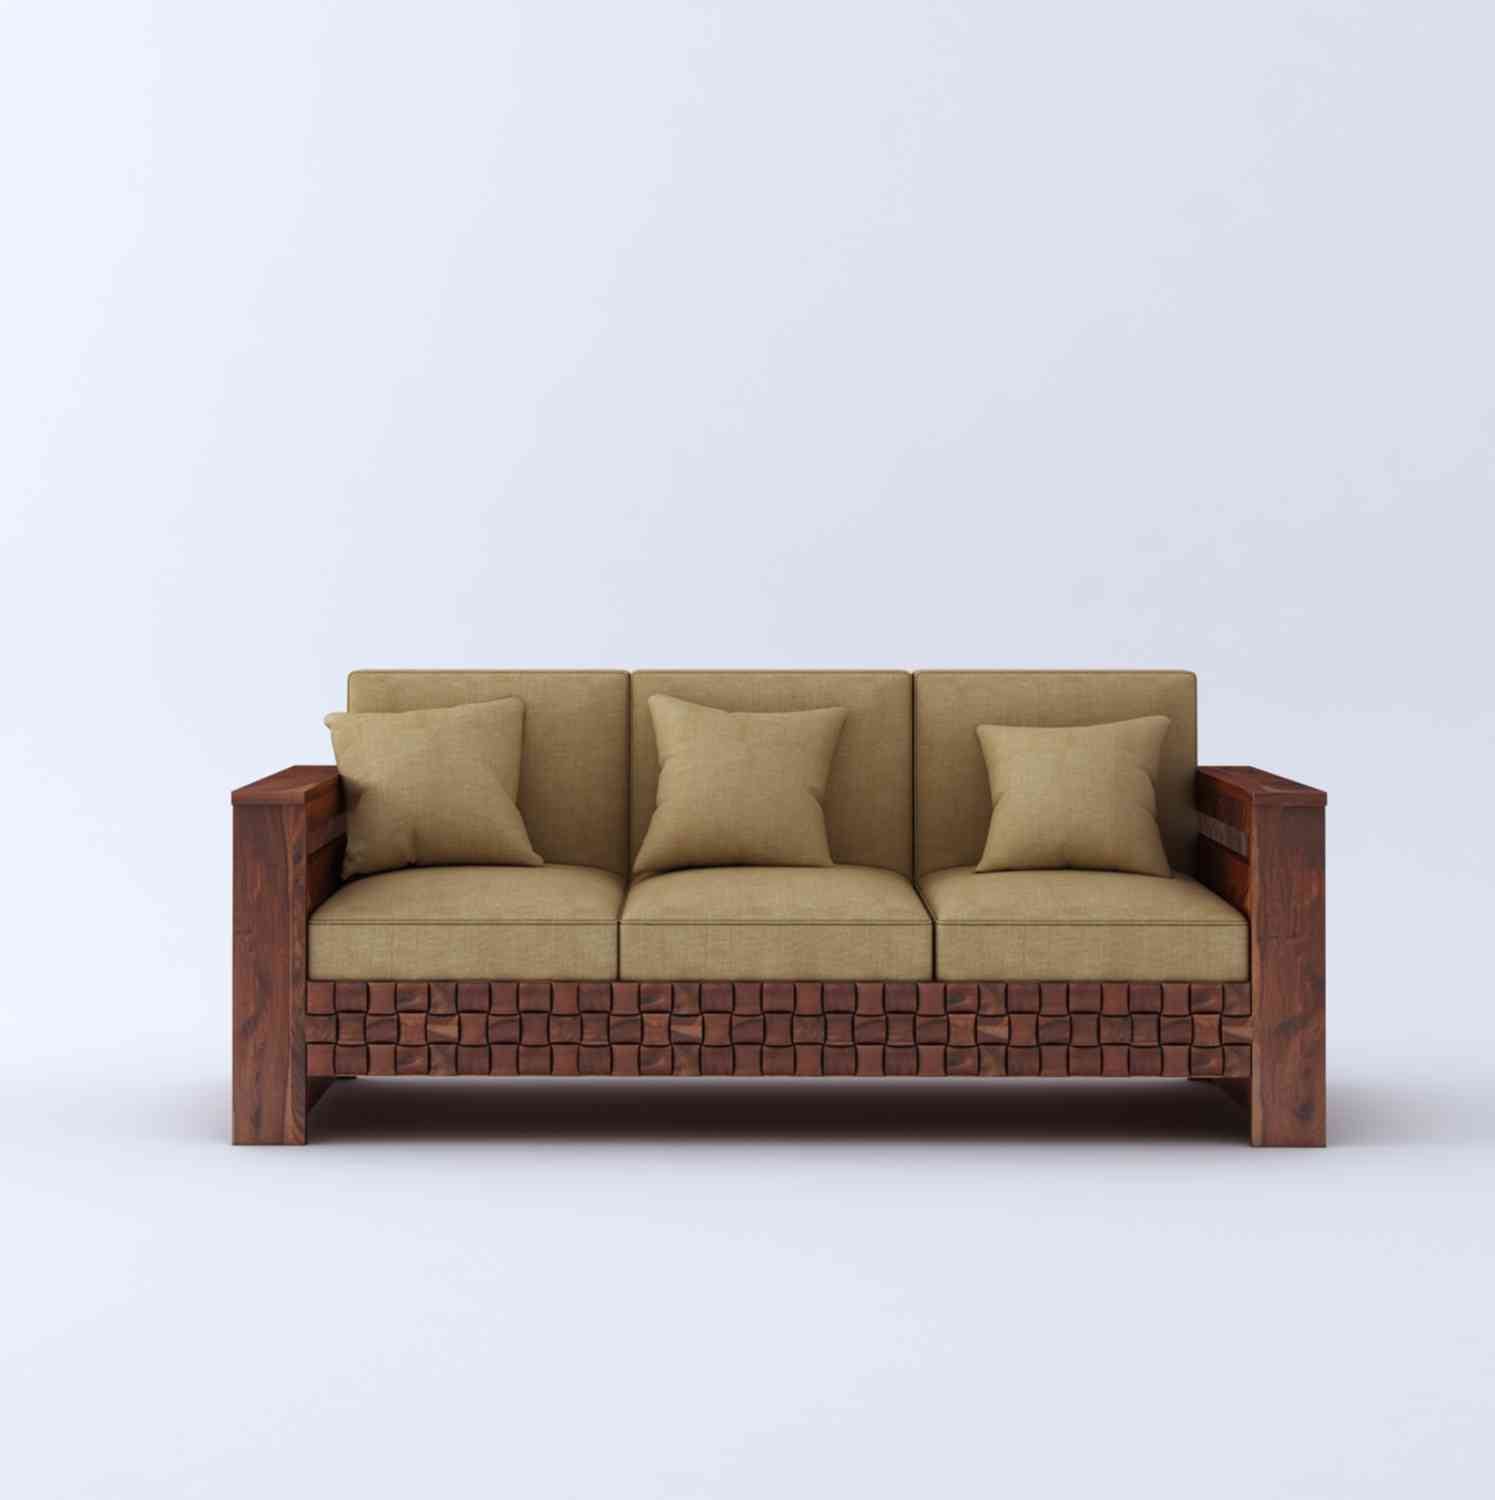 Olivia Solid Sheesham Wood 5 Seater Sofa Set (Natural Finish, 3+1+1)